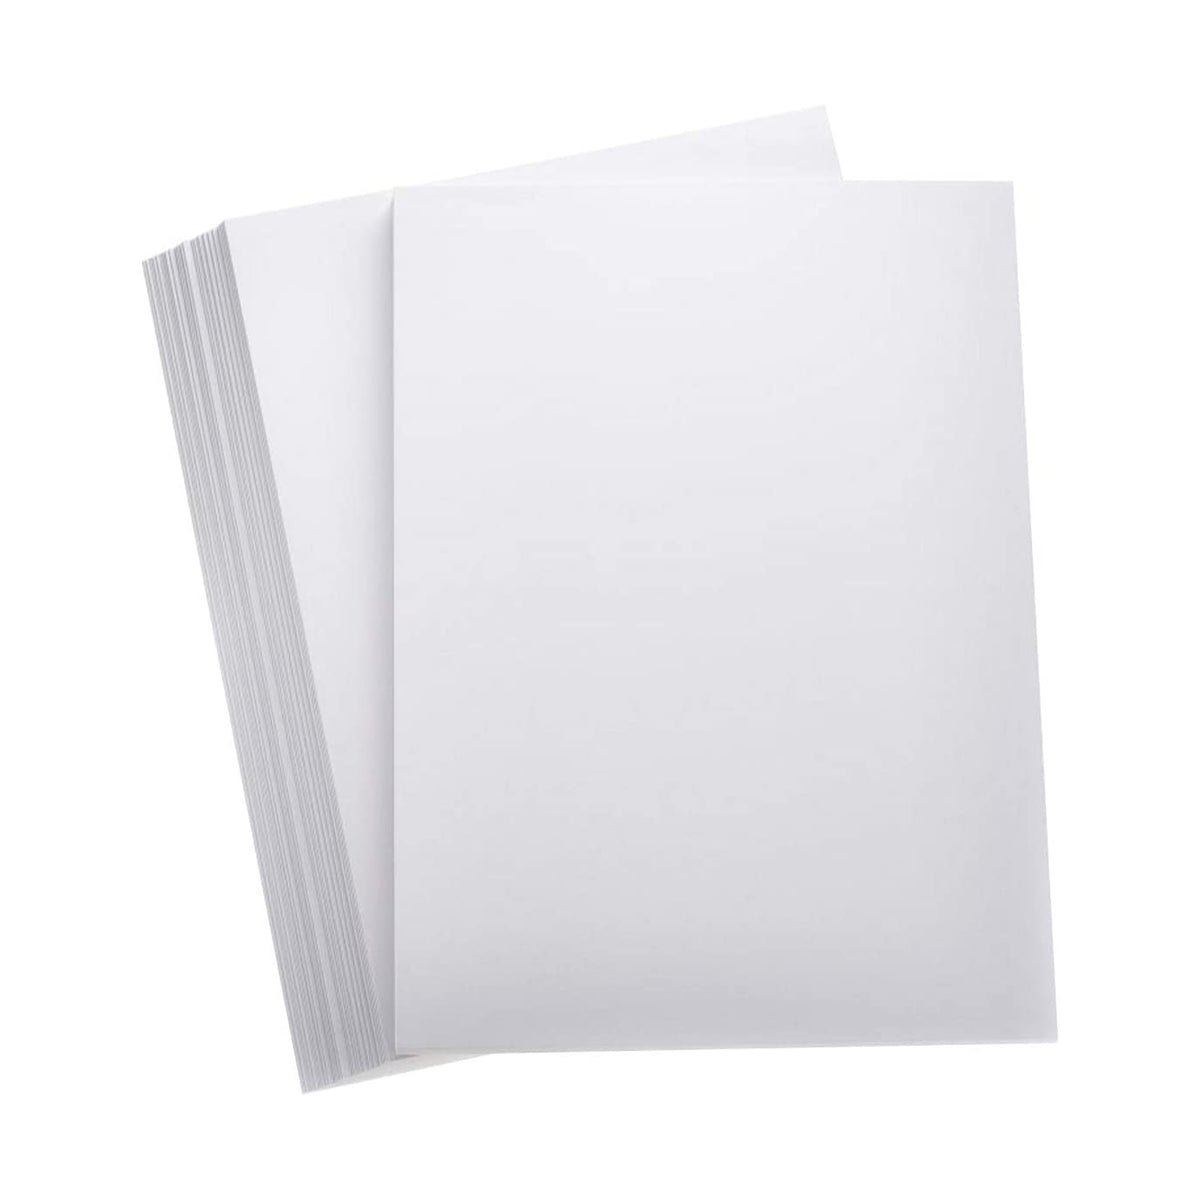 Seawhite White Card 300gsm 50 Sheet Pack